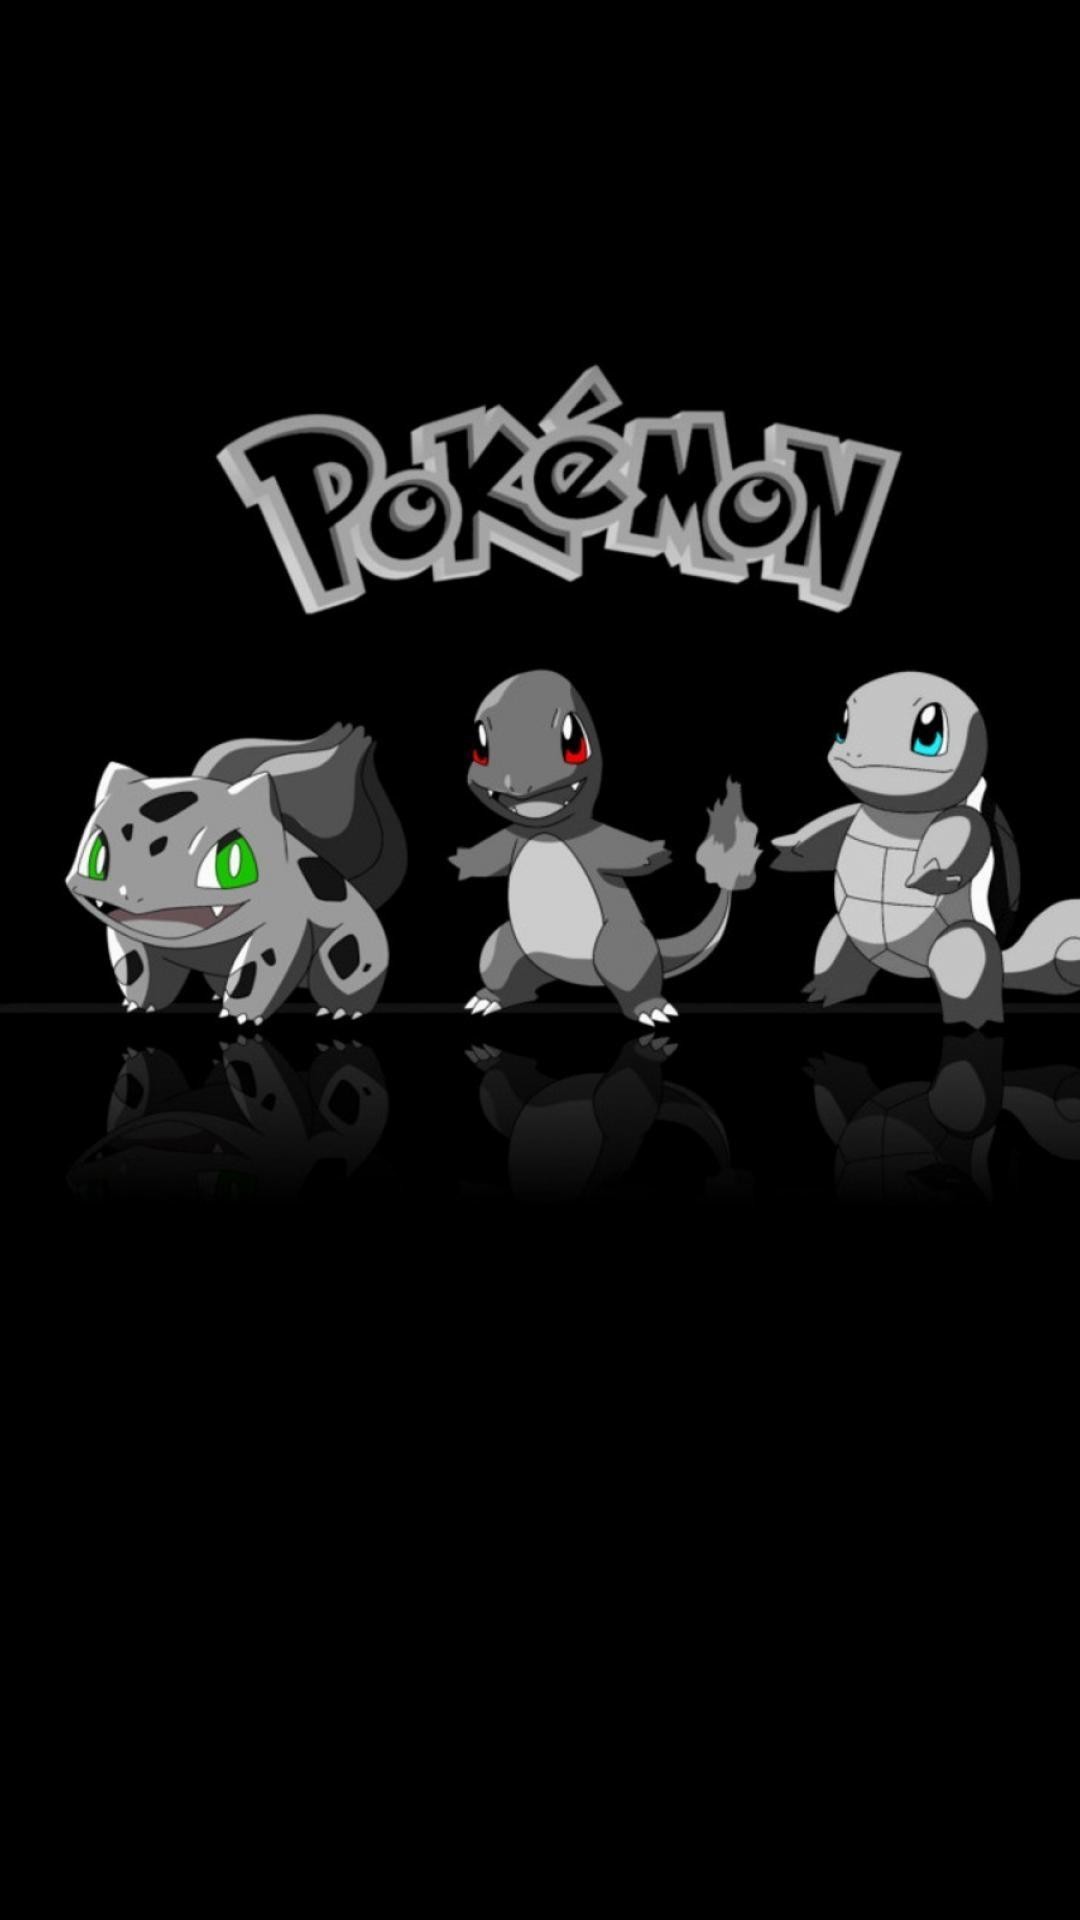 1080x1920 Pokemon-wallpaper-1920x1080-black-and-white-iphone-6-